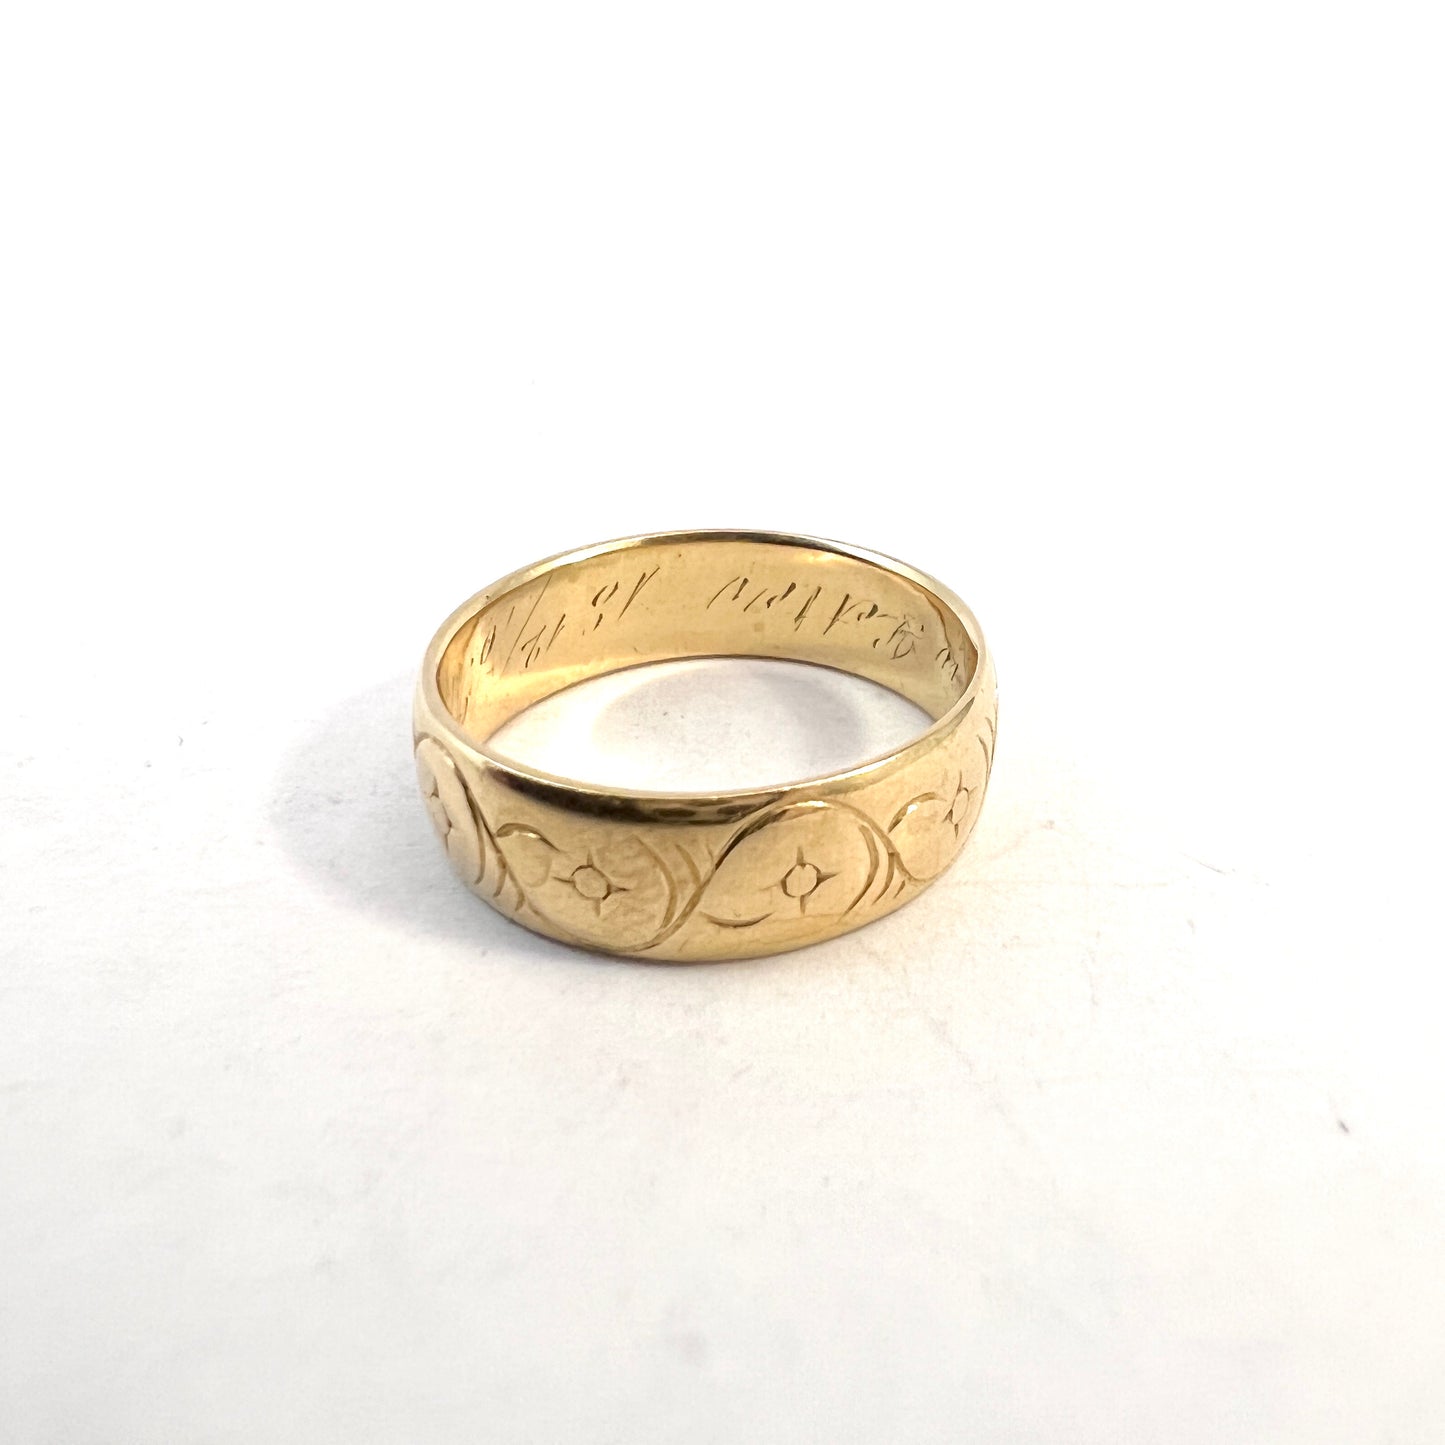 CA Sandberg, Sweden 1897. Antique Victorian 18k Gold Wedding Band Ring.